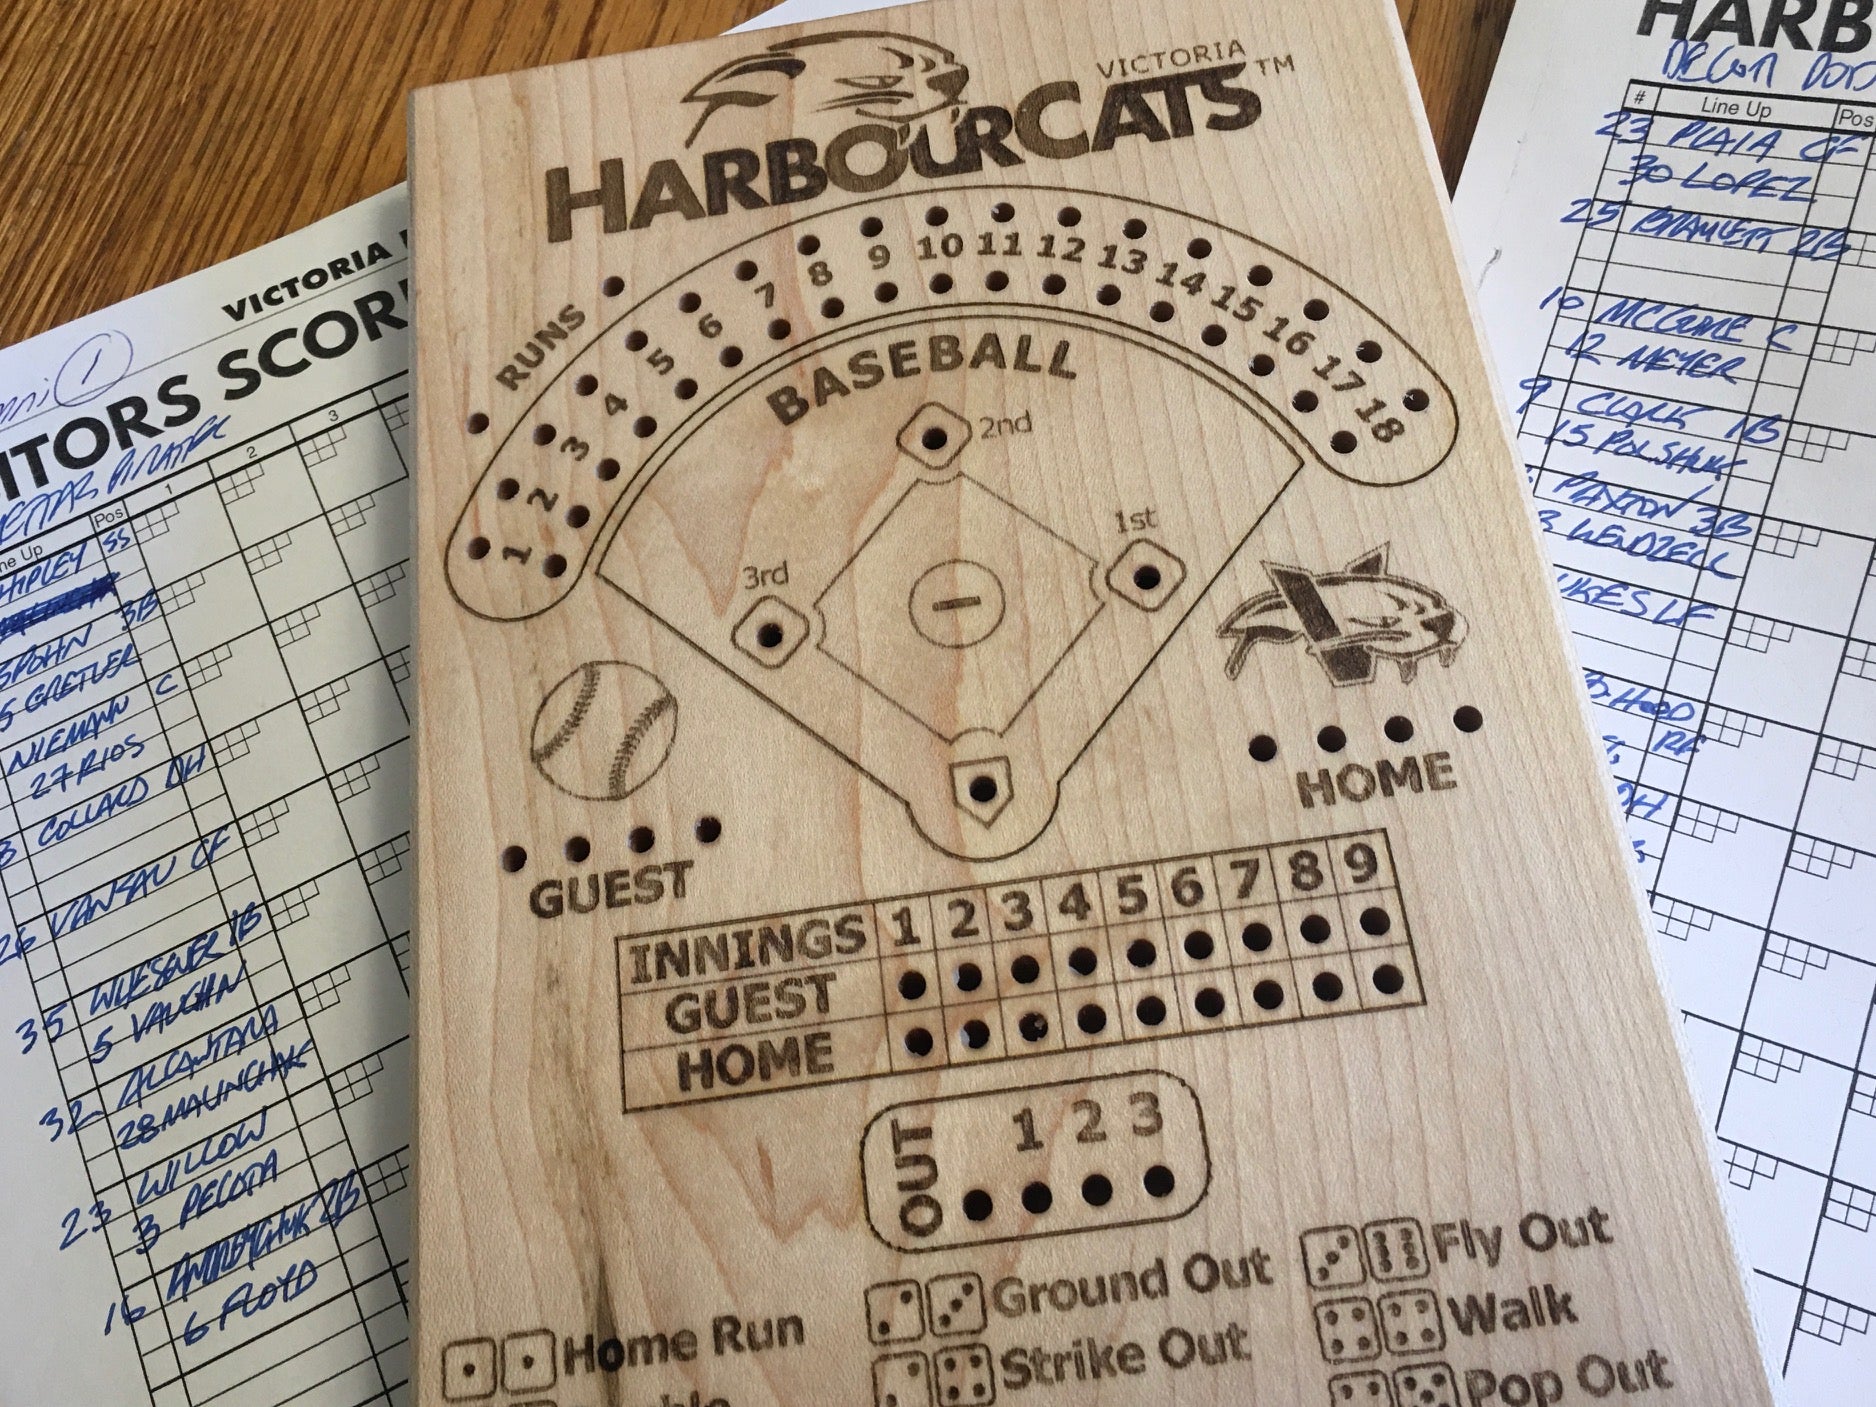 Victoria HarbourCats Branded Peg-Board Baseball Game